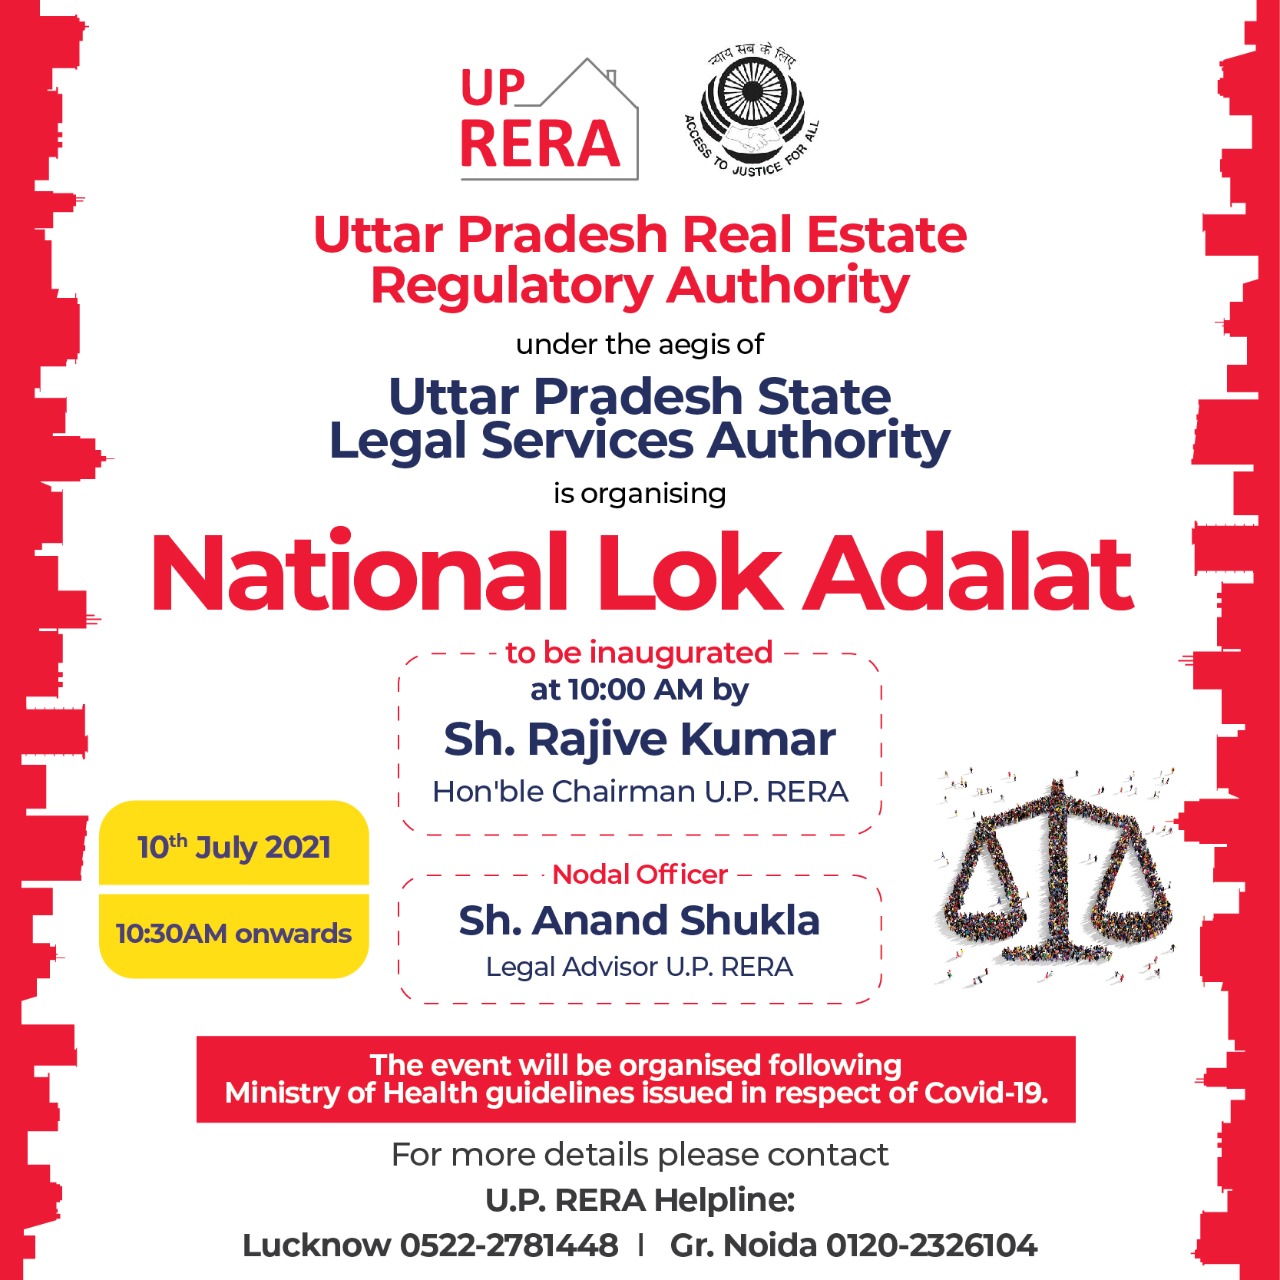 Up Rera Uttar Pradesh Real Estate Regulatory Authority